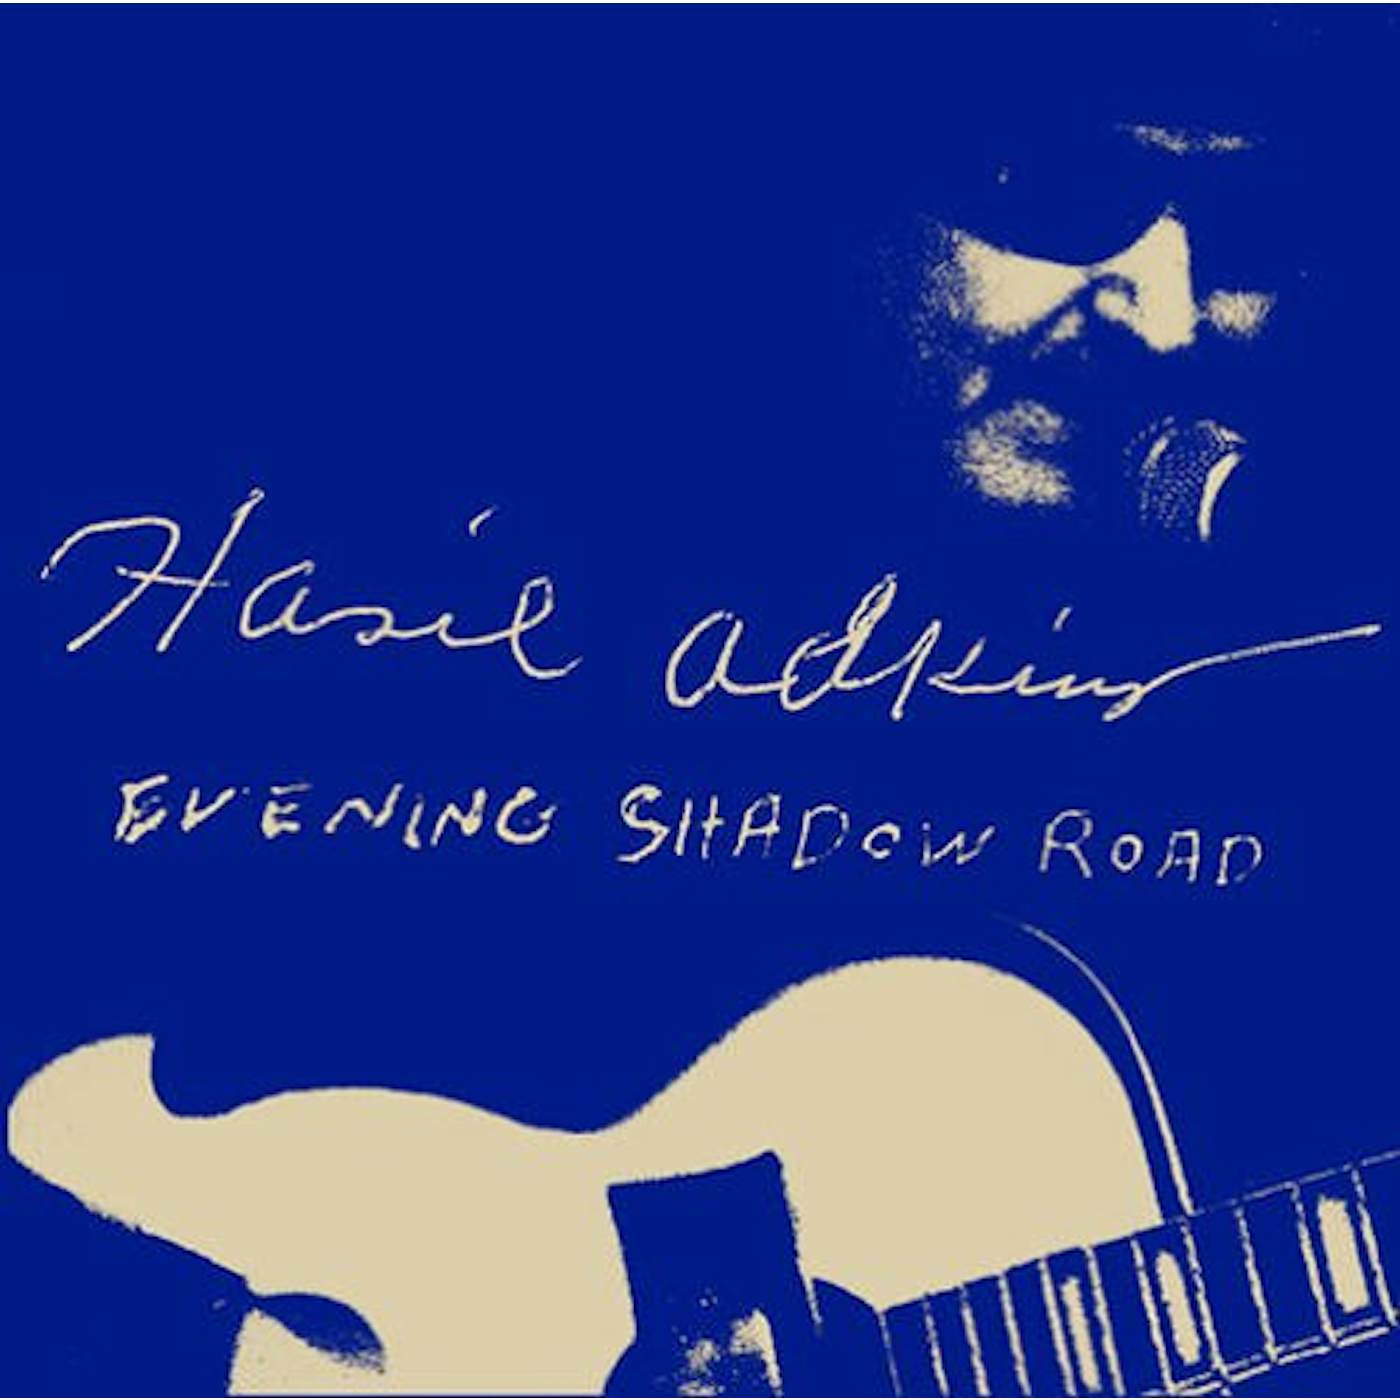 Hasil Adkins EVENING SHADOW ROAD Vinyl Record